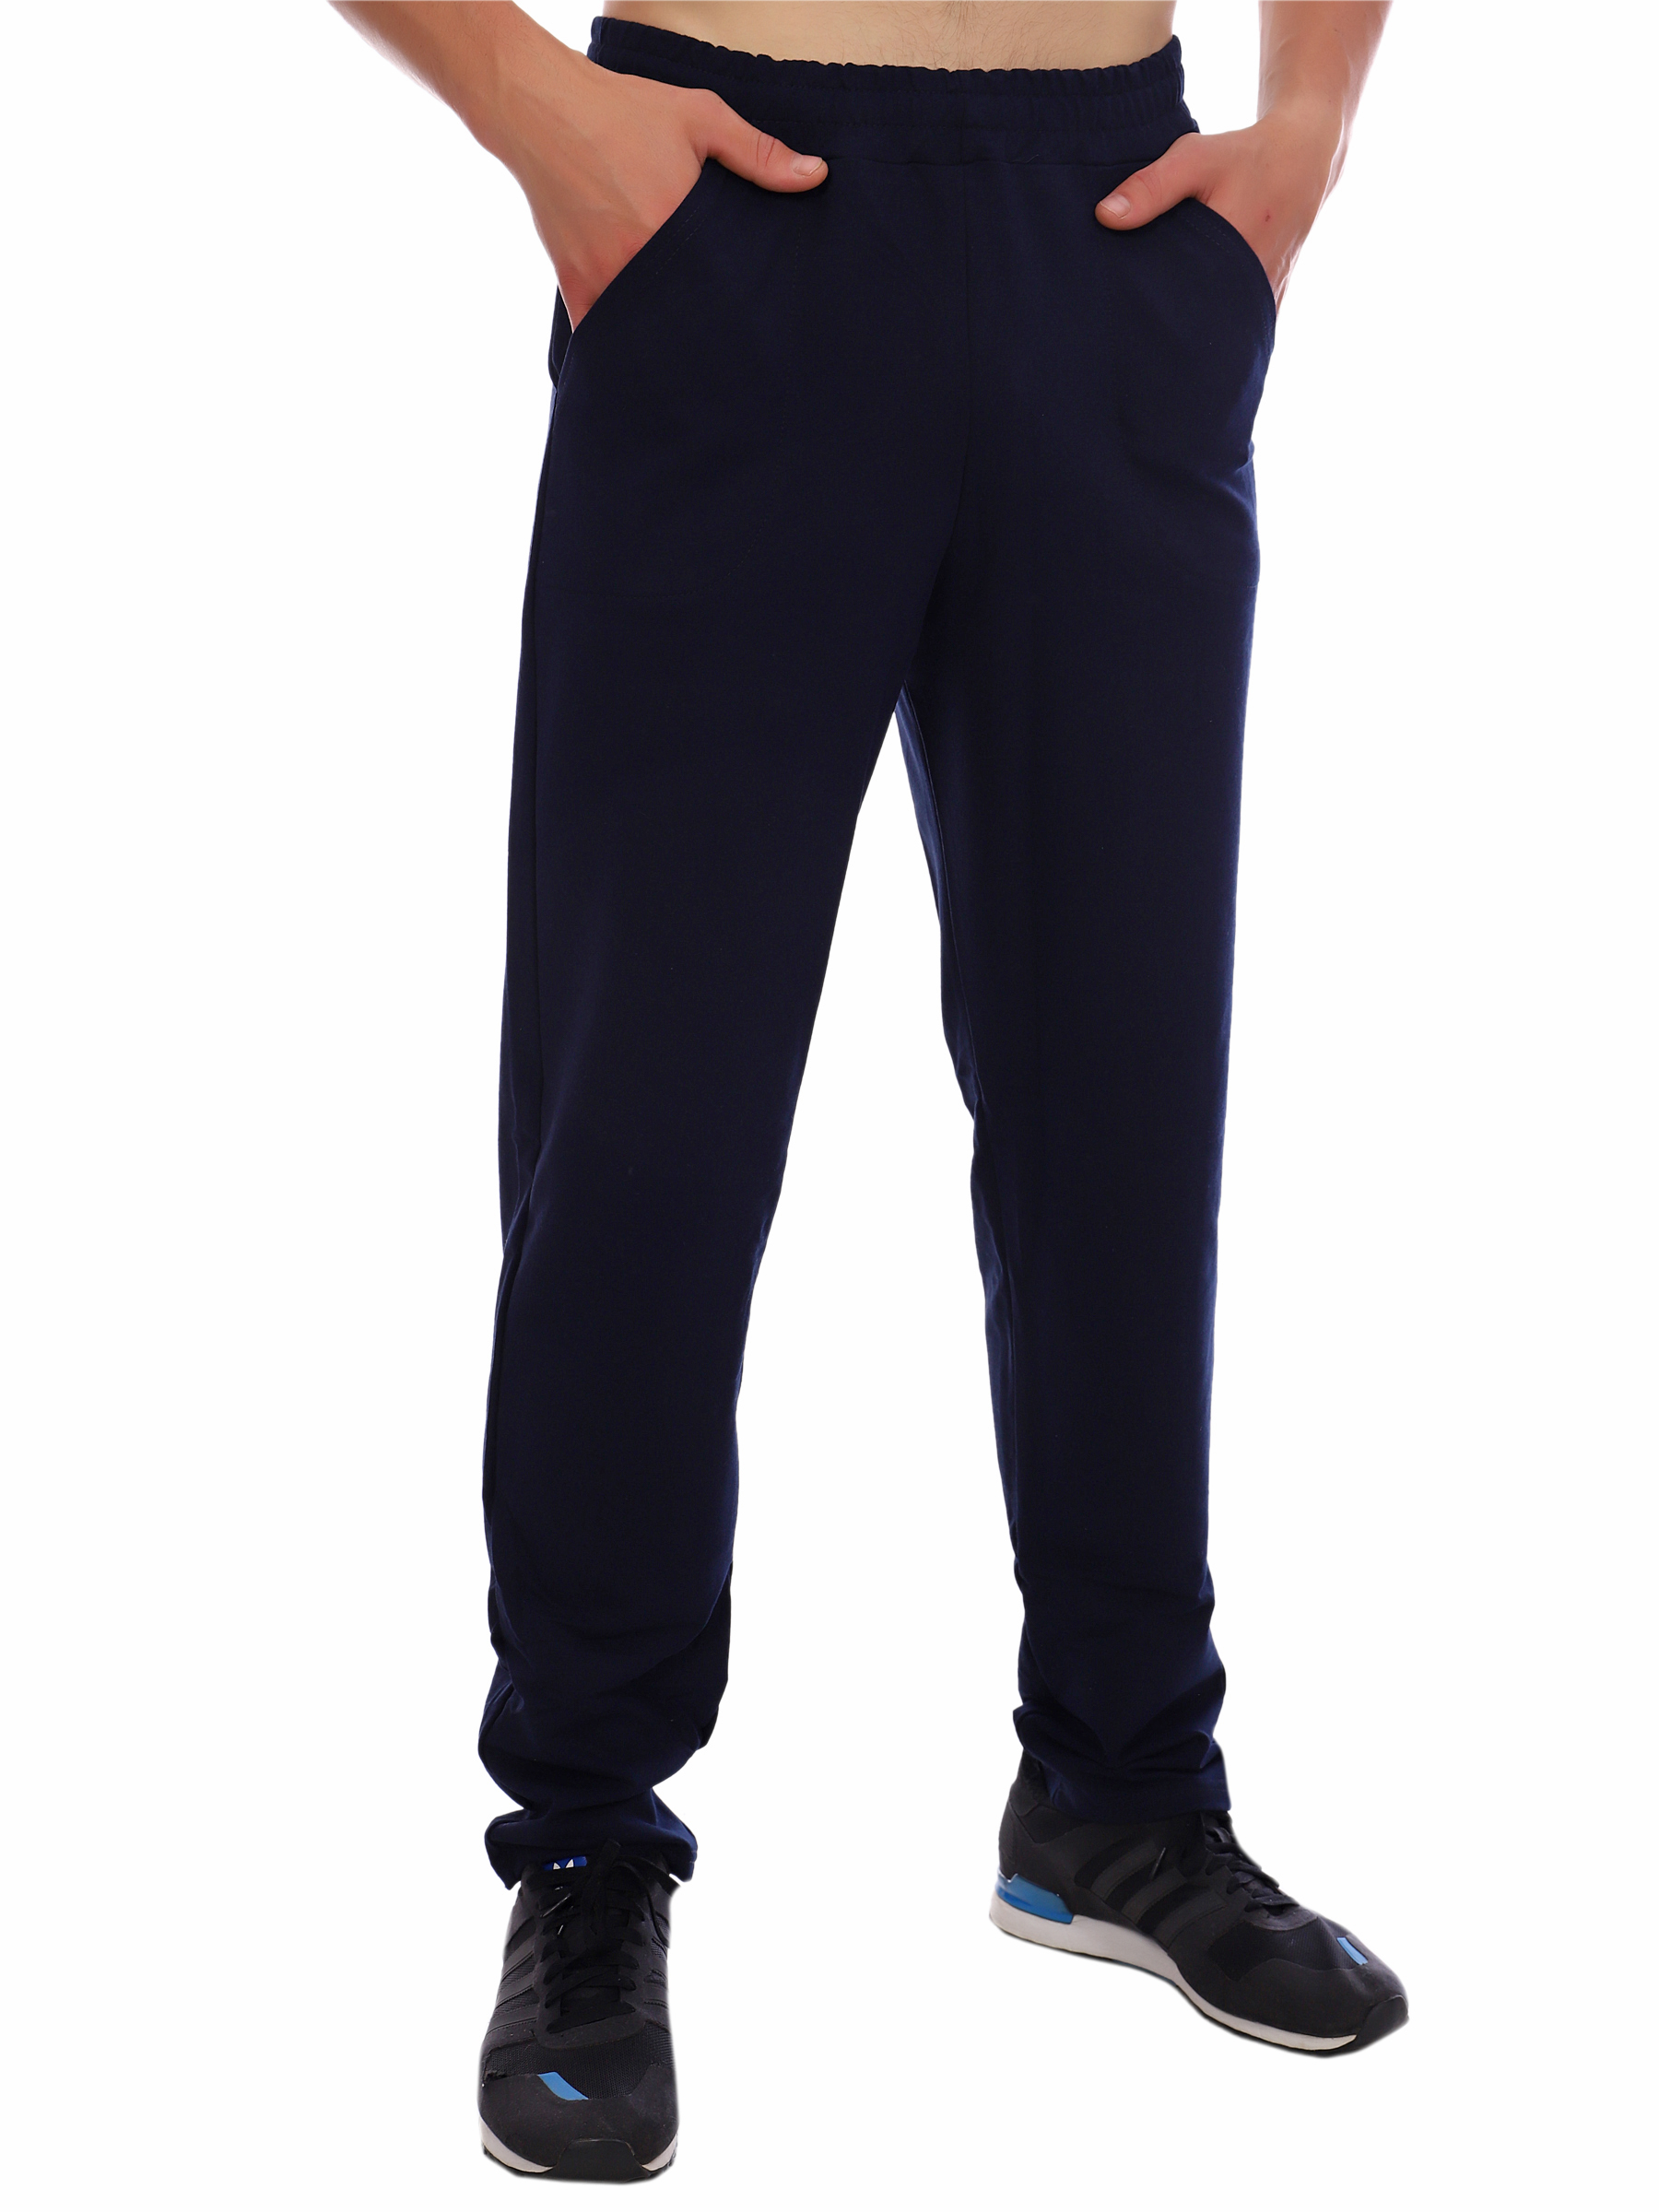 Спортивные брюки мужские ИвГрадТрикотаж Б175 Спорт синие 62 RU